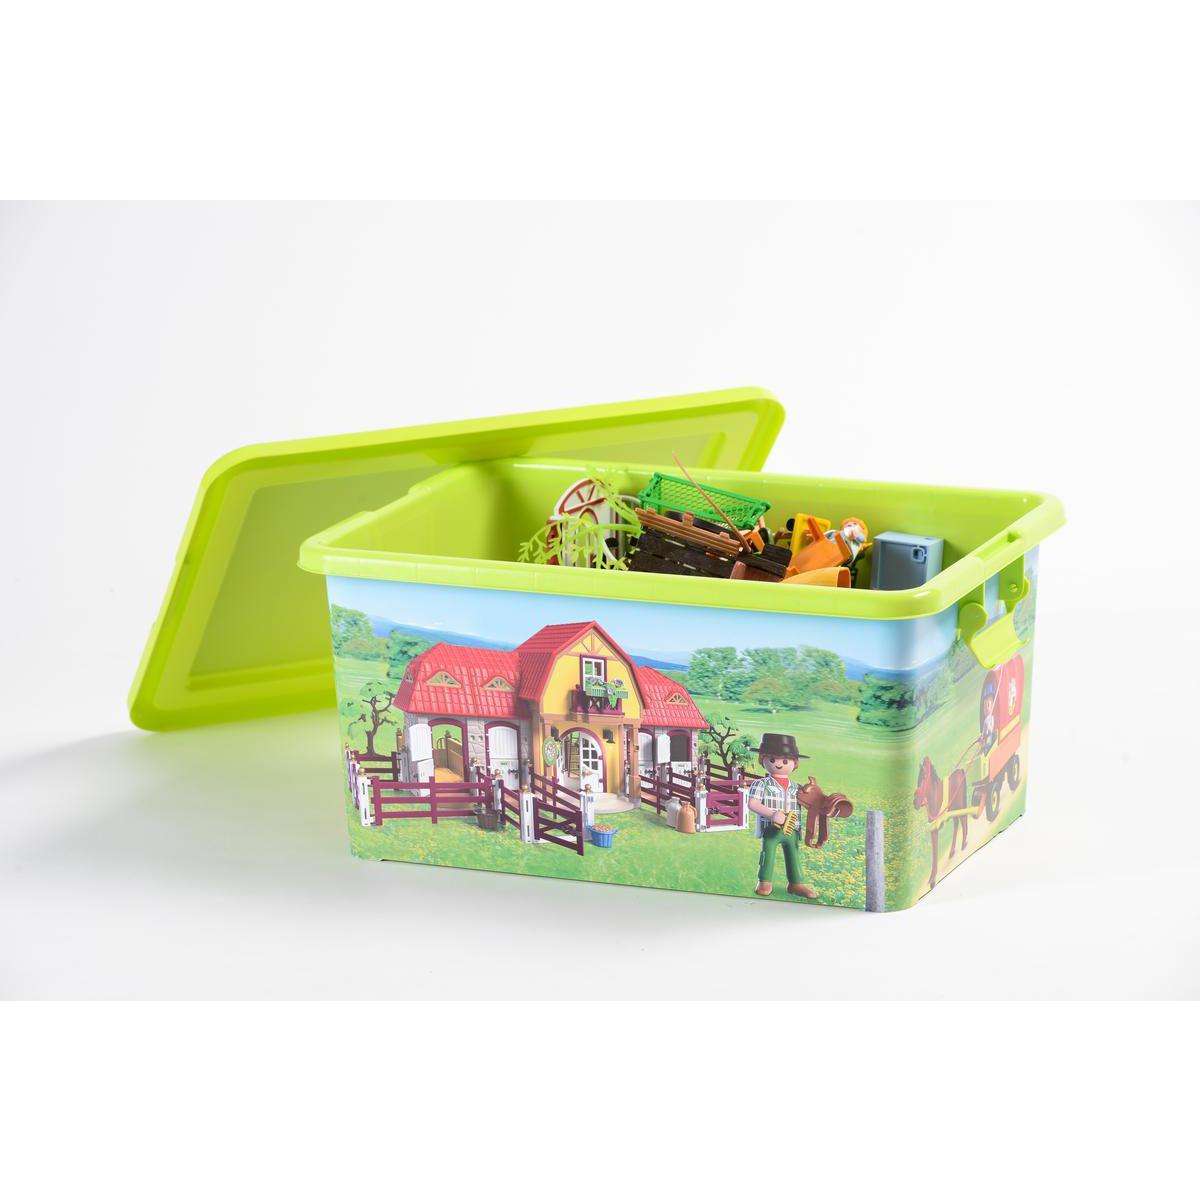 Boîte Playmobile - Plastique - 40 x 34 x 17 cm - Multicolore